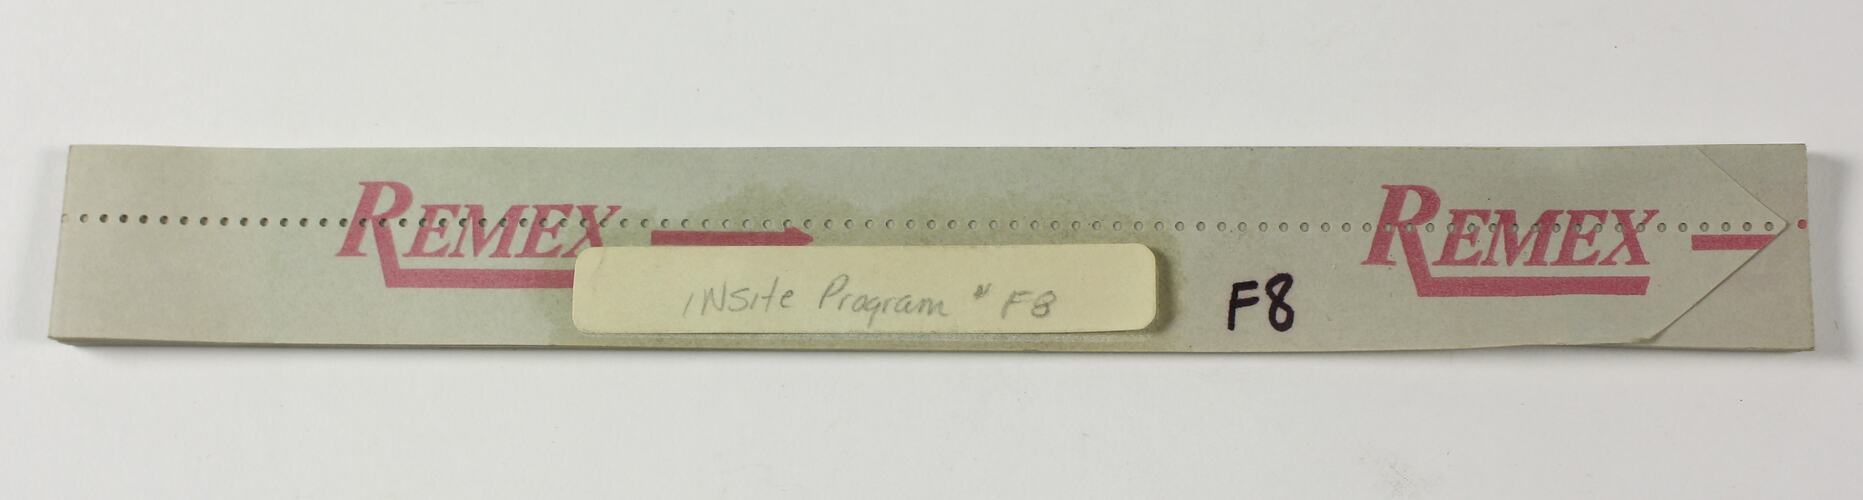 Paper Tape - Insite Program F8